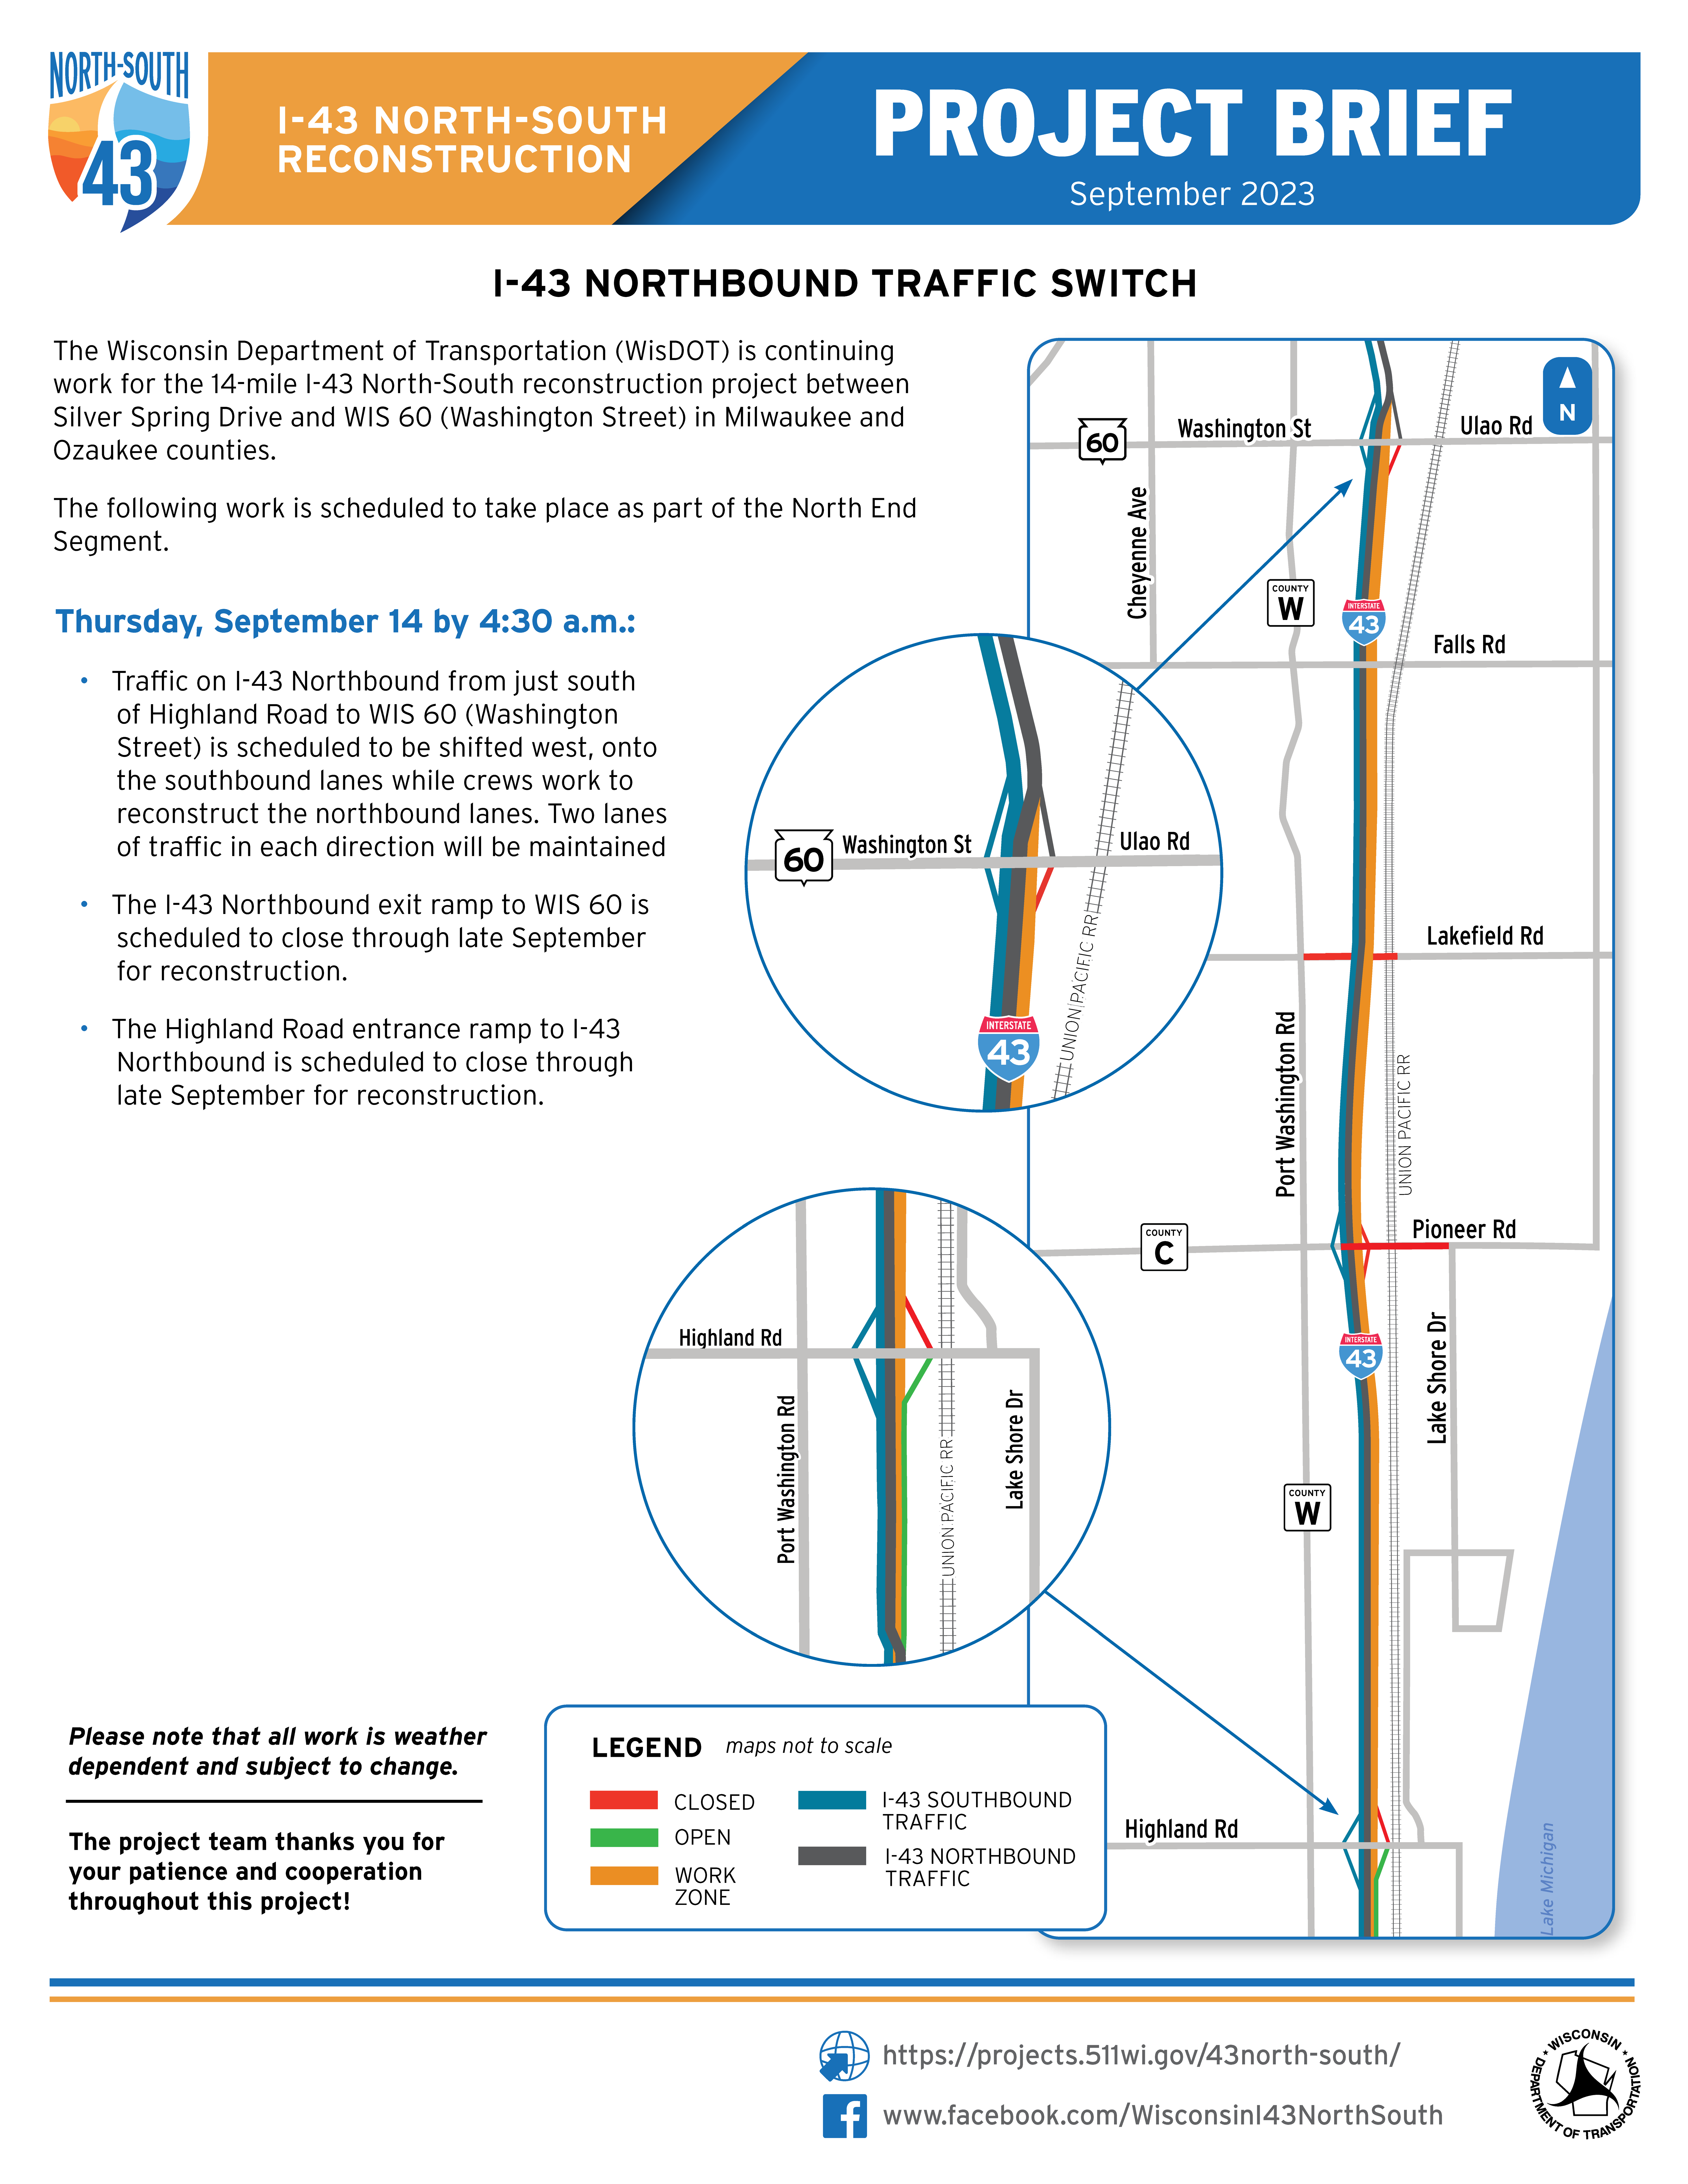 September 14, I-43 Northbound Traffic Shift